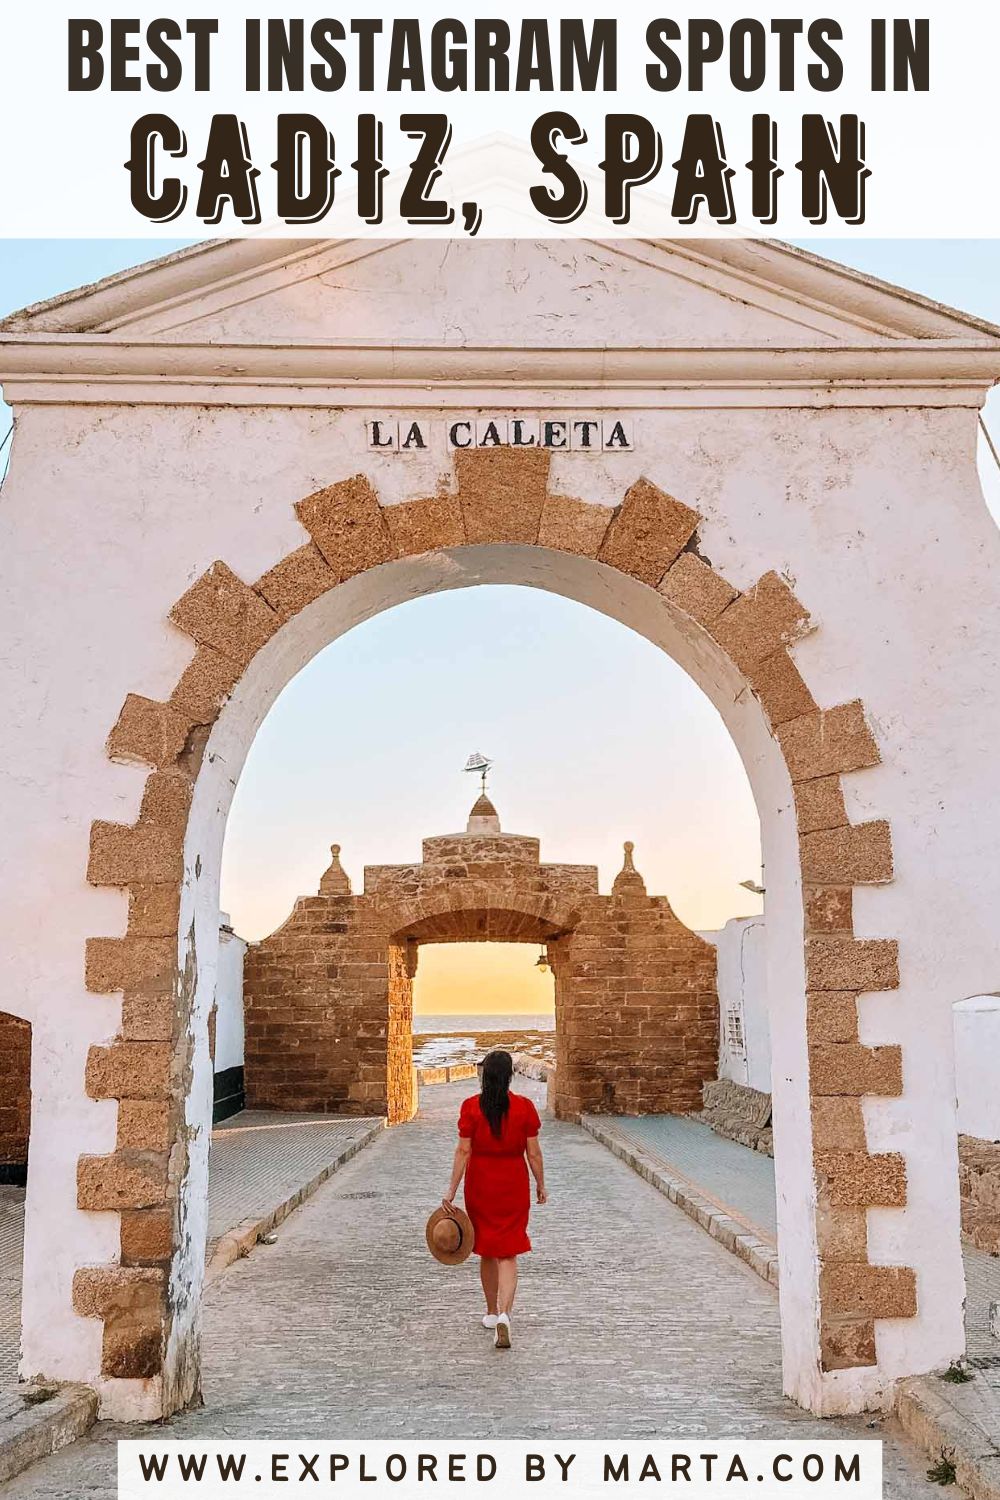 Must visit Instagram spots in Cadiz, Spain